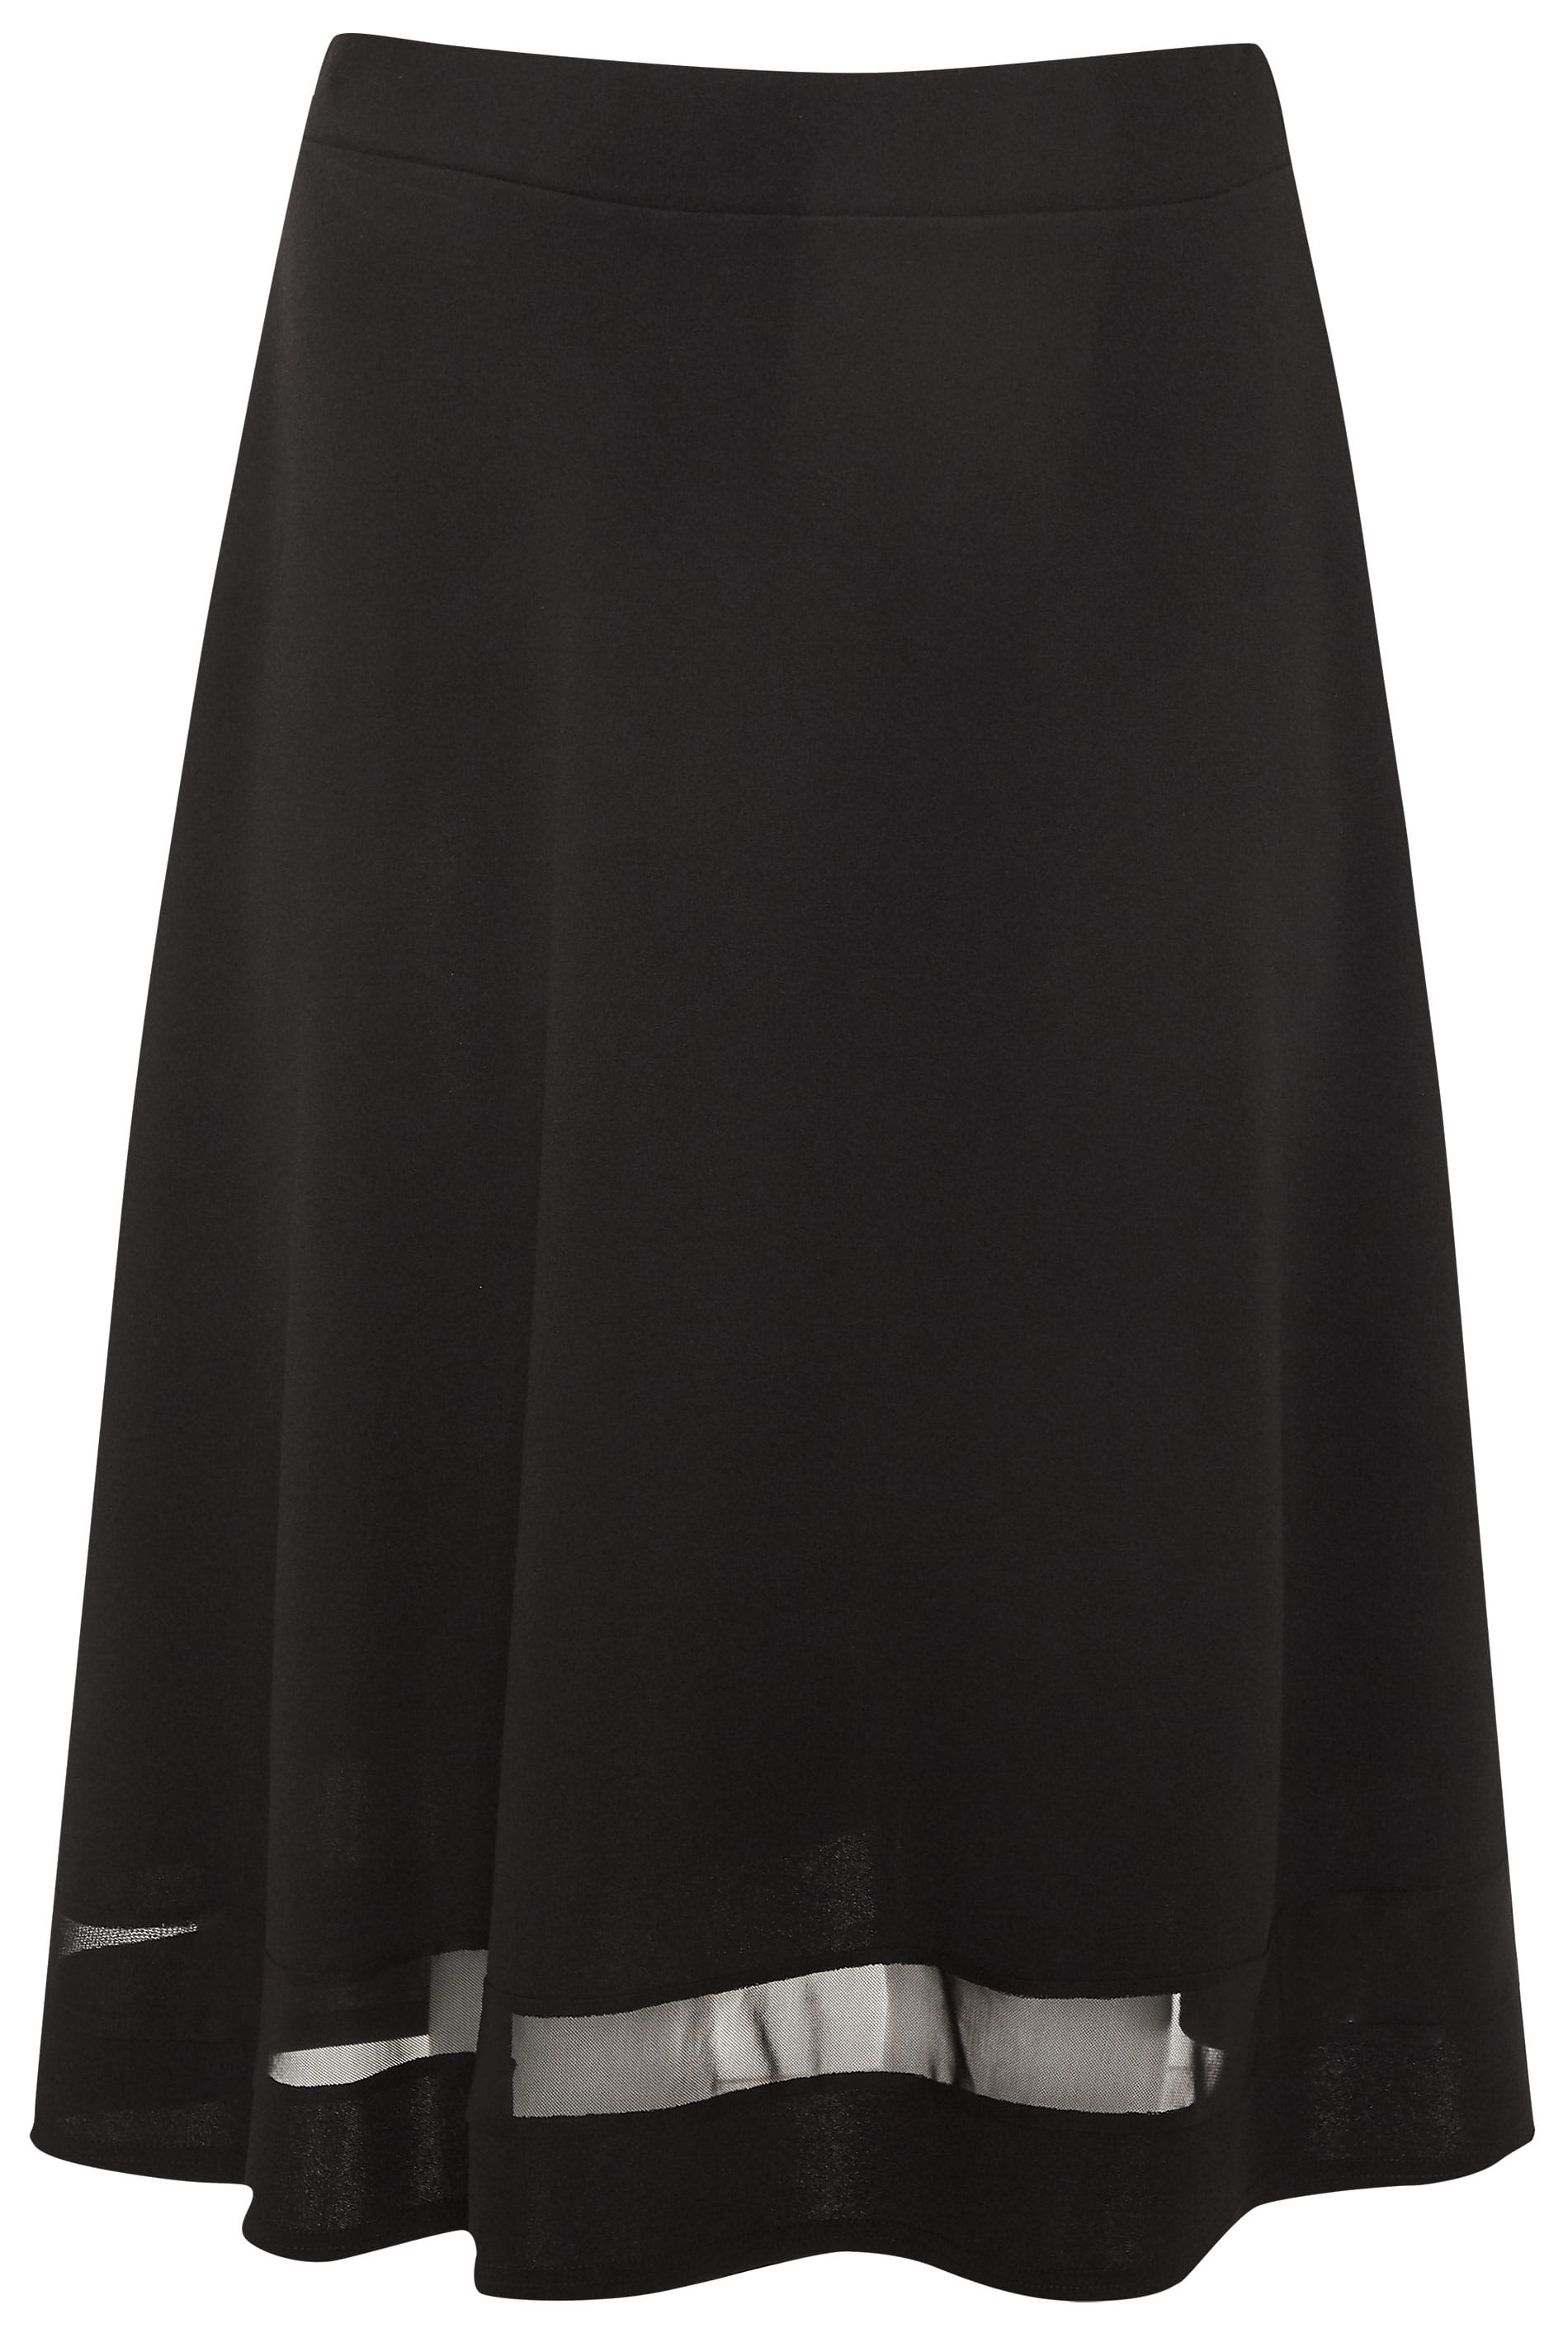 Yours London Black Mesh Panel Flared Skater Skirt Yours Clothing 7169